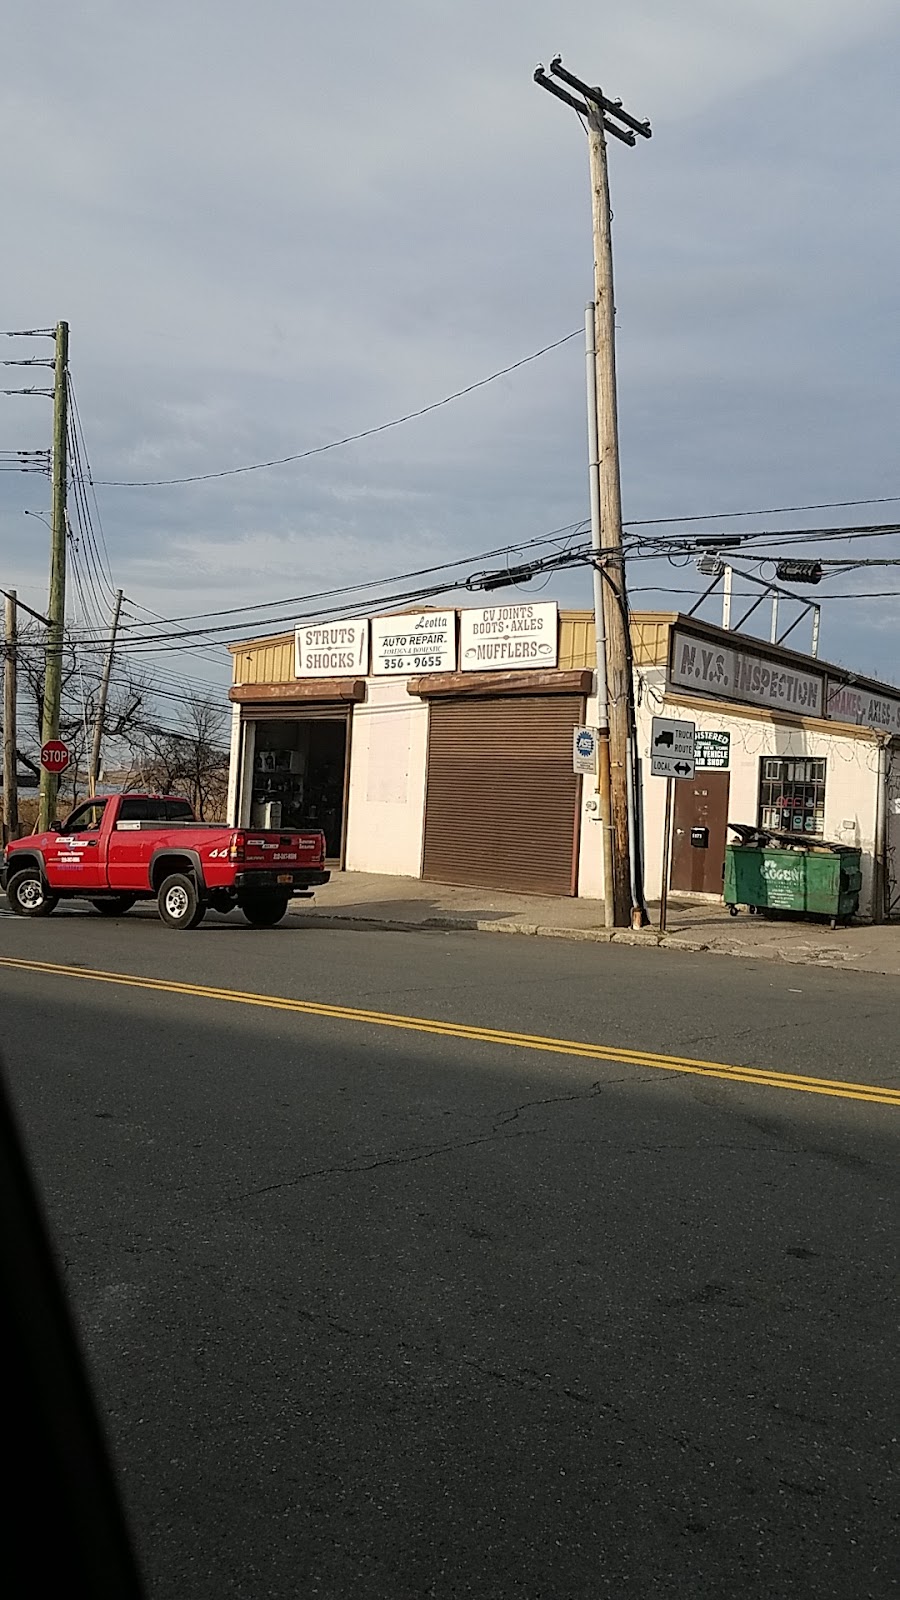 Leotta Auto Repair Inc | 1171 Rossville Ave, Staten Island, NY 10309 | Phone: (718) 356-9655